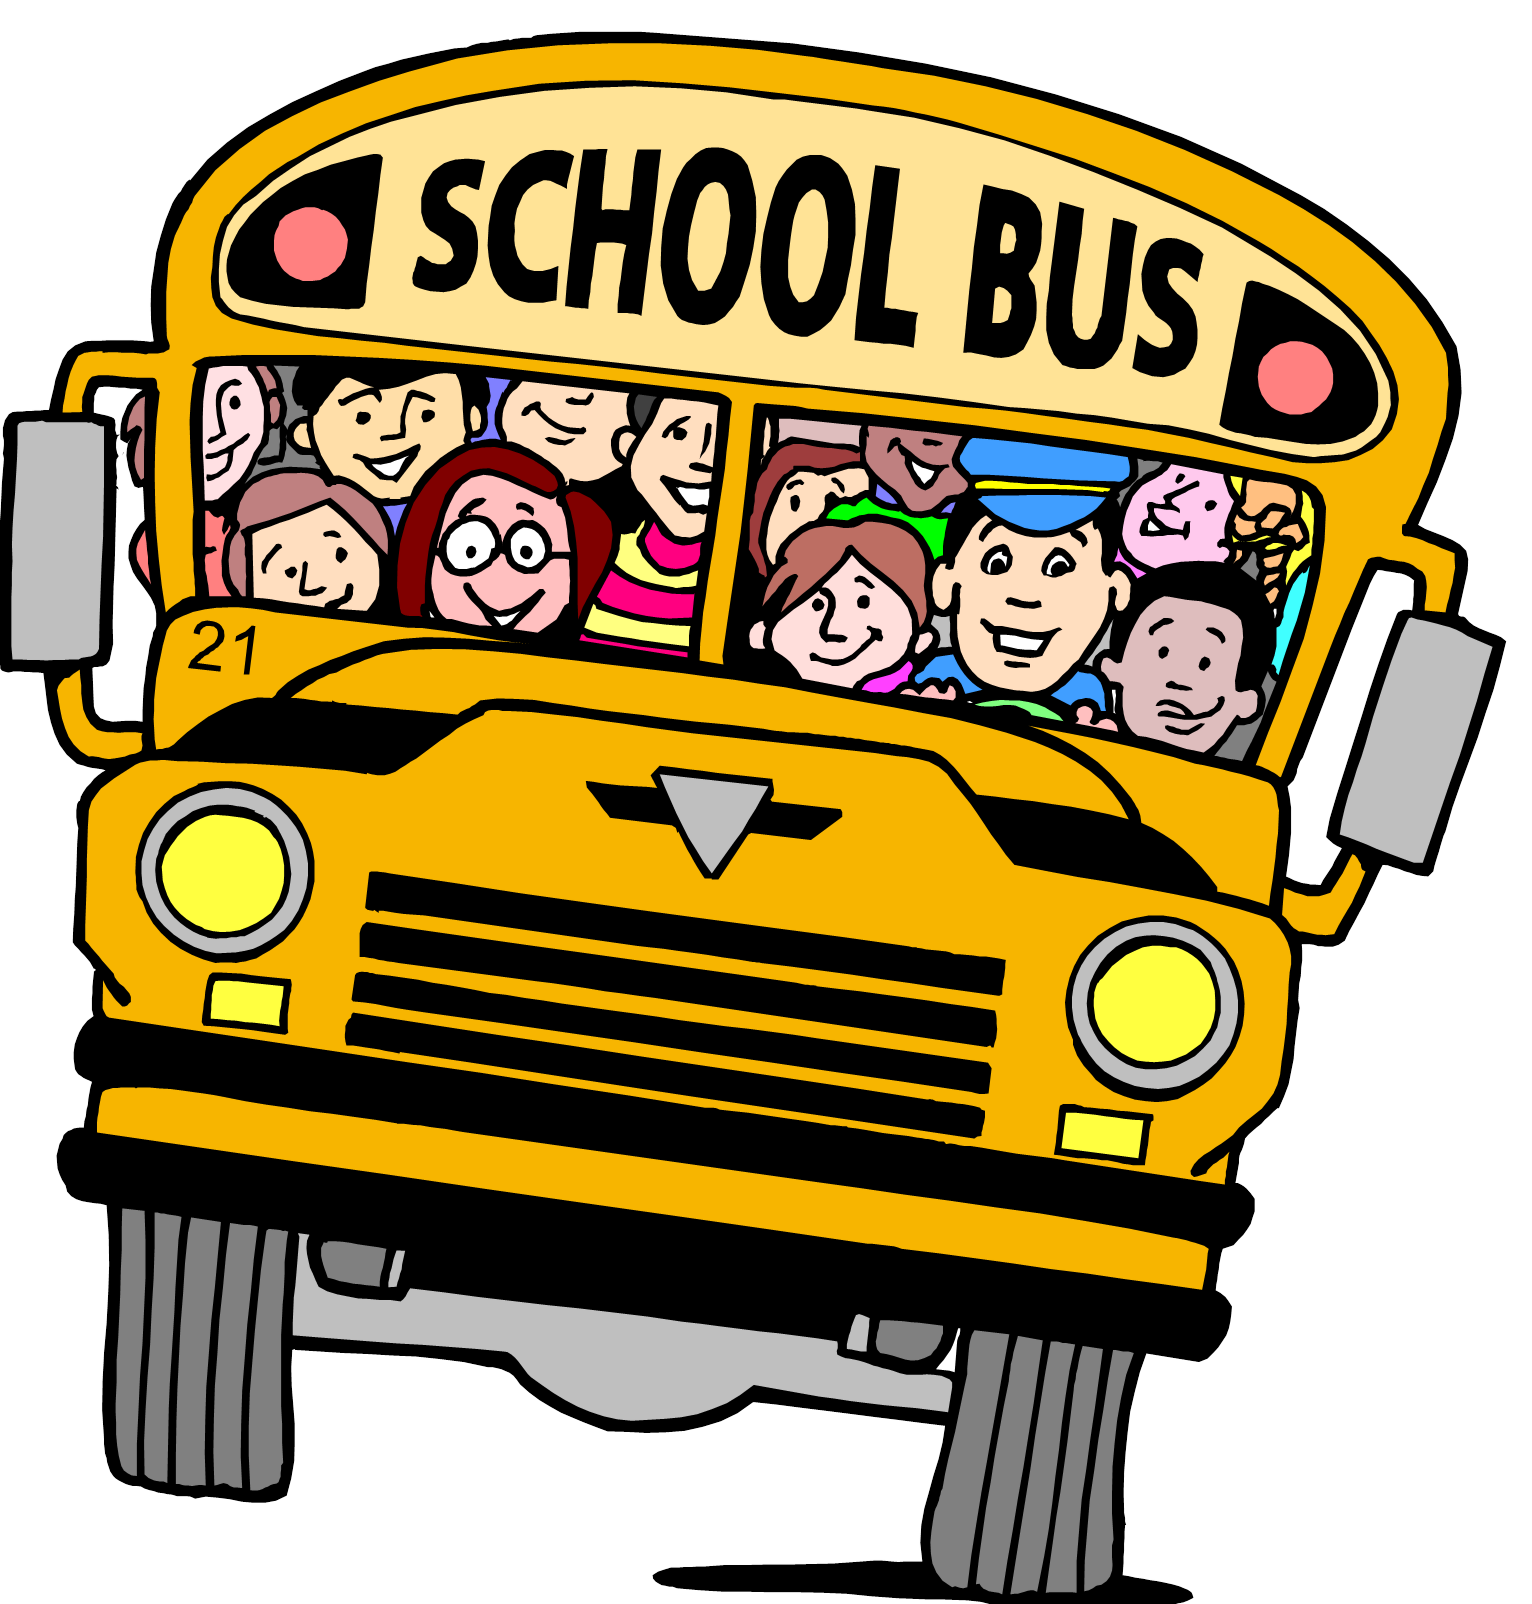 School bus clipart vector